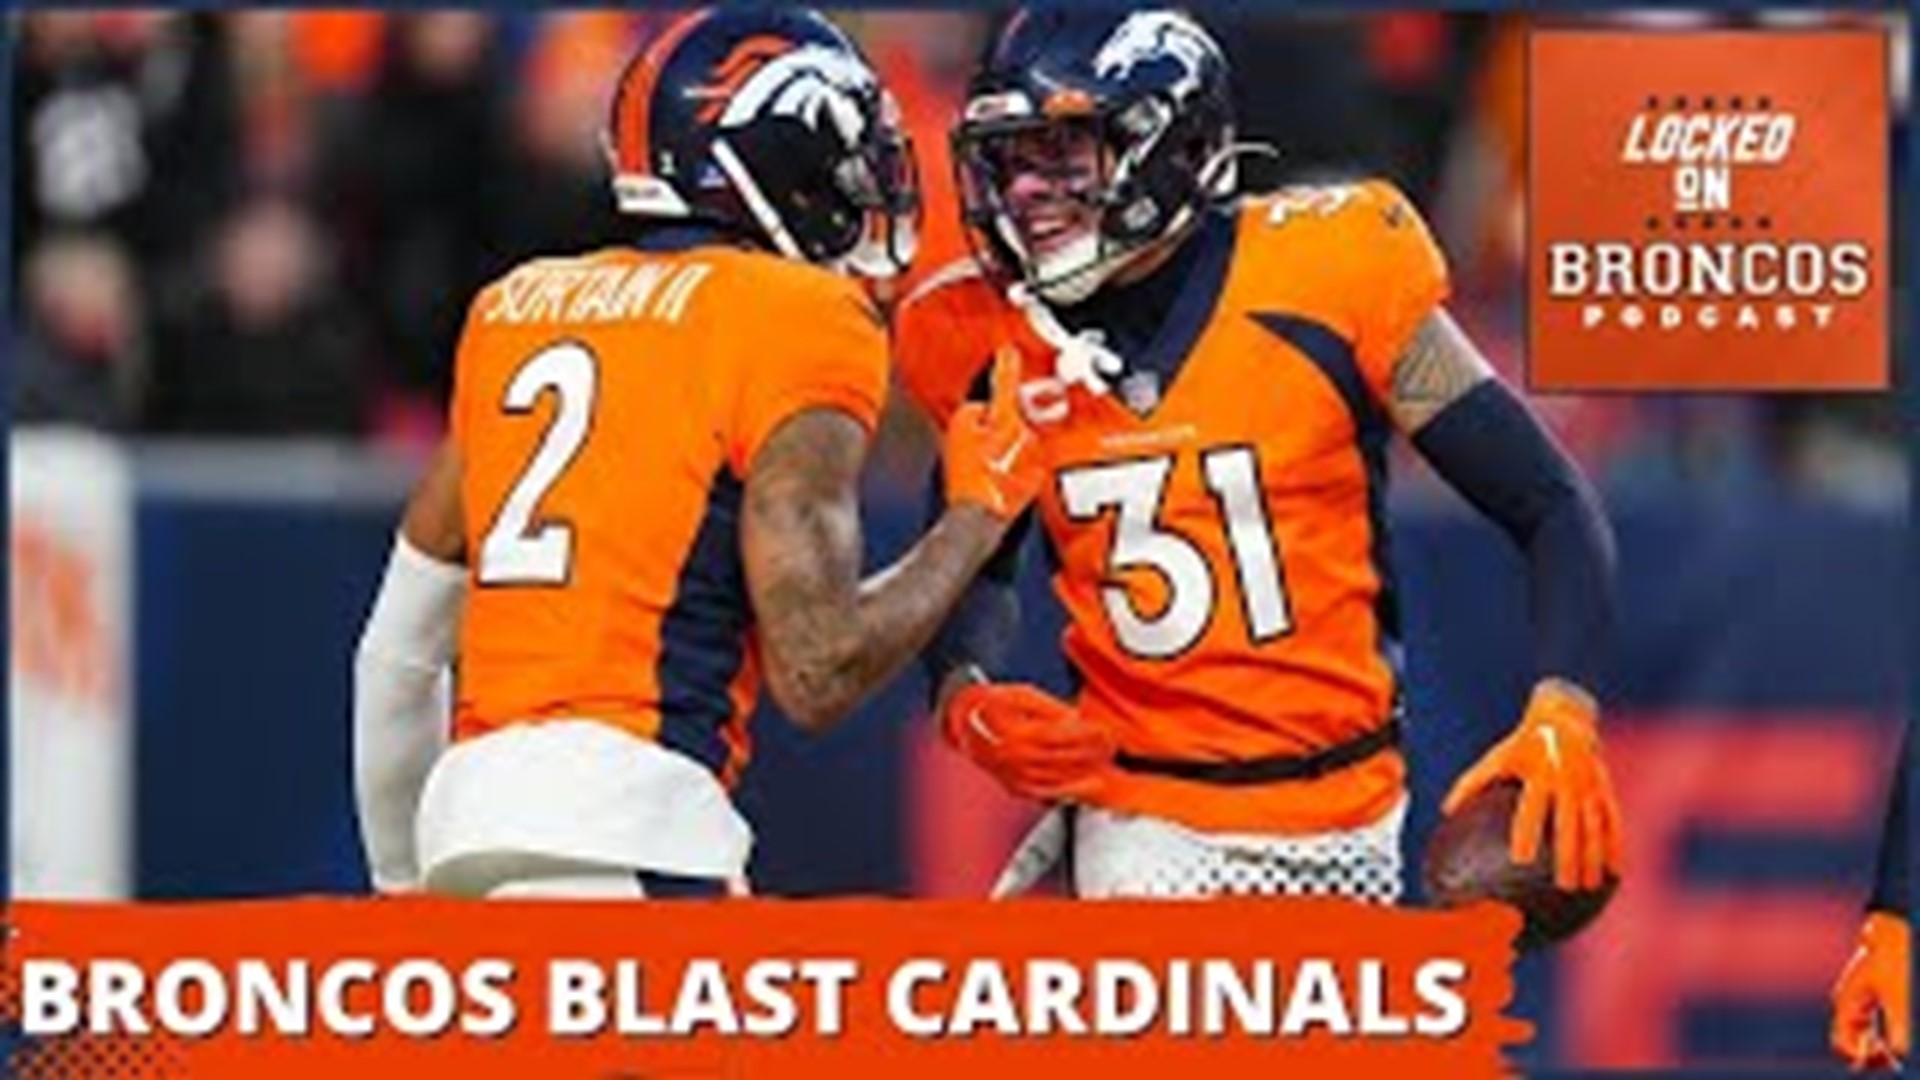 Denver Broncos, Justin Simmons fluster Arizona Cardinals in 24-15 win, Locked On Broncos Podcast